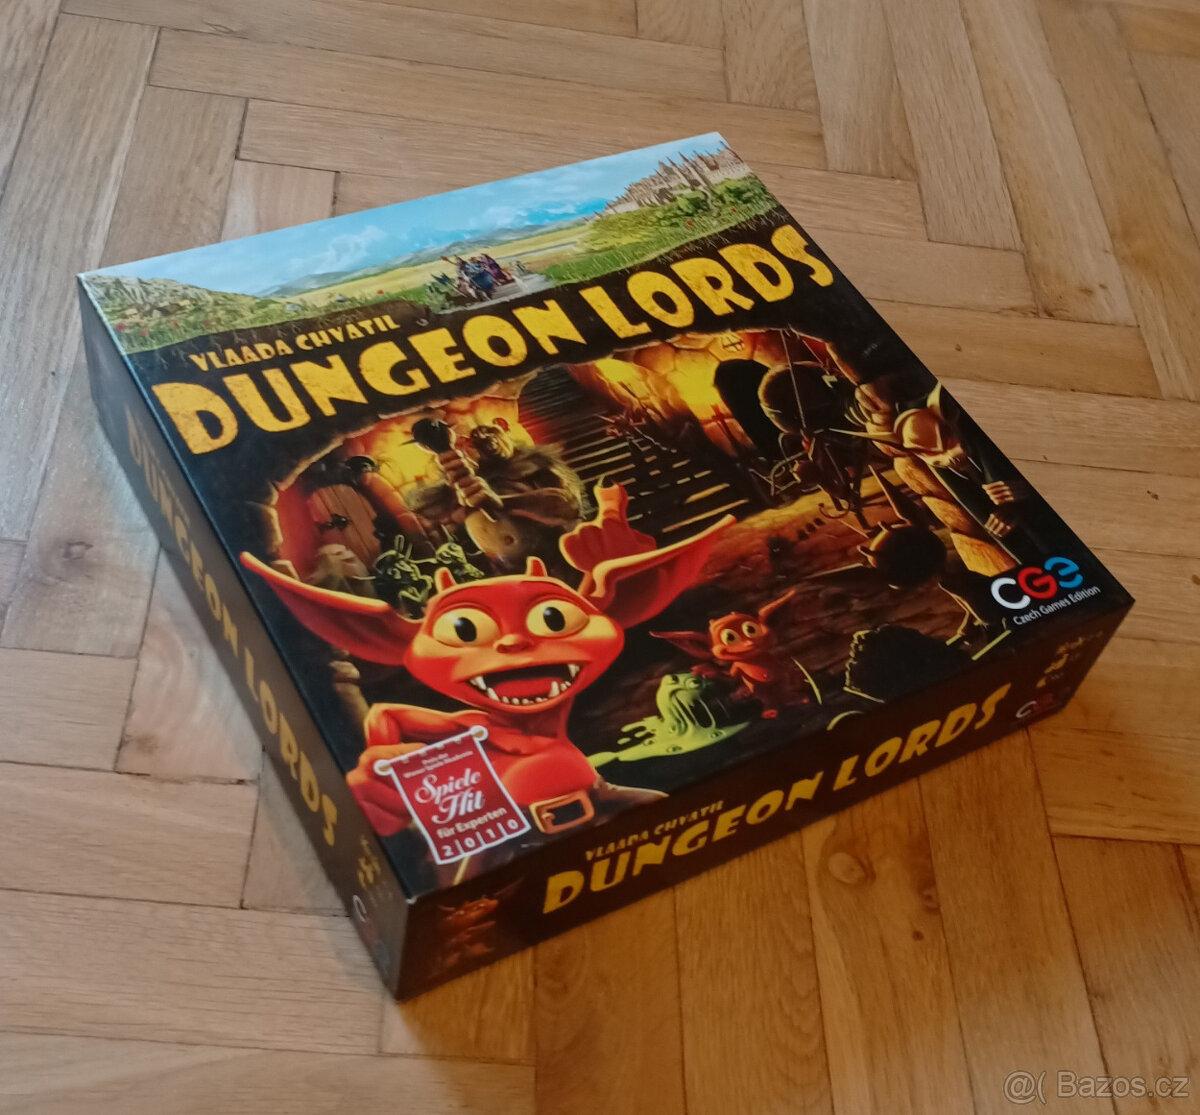 Deskova hra: Dungeon Lords od Vlaadi Chvatila.